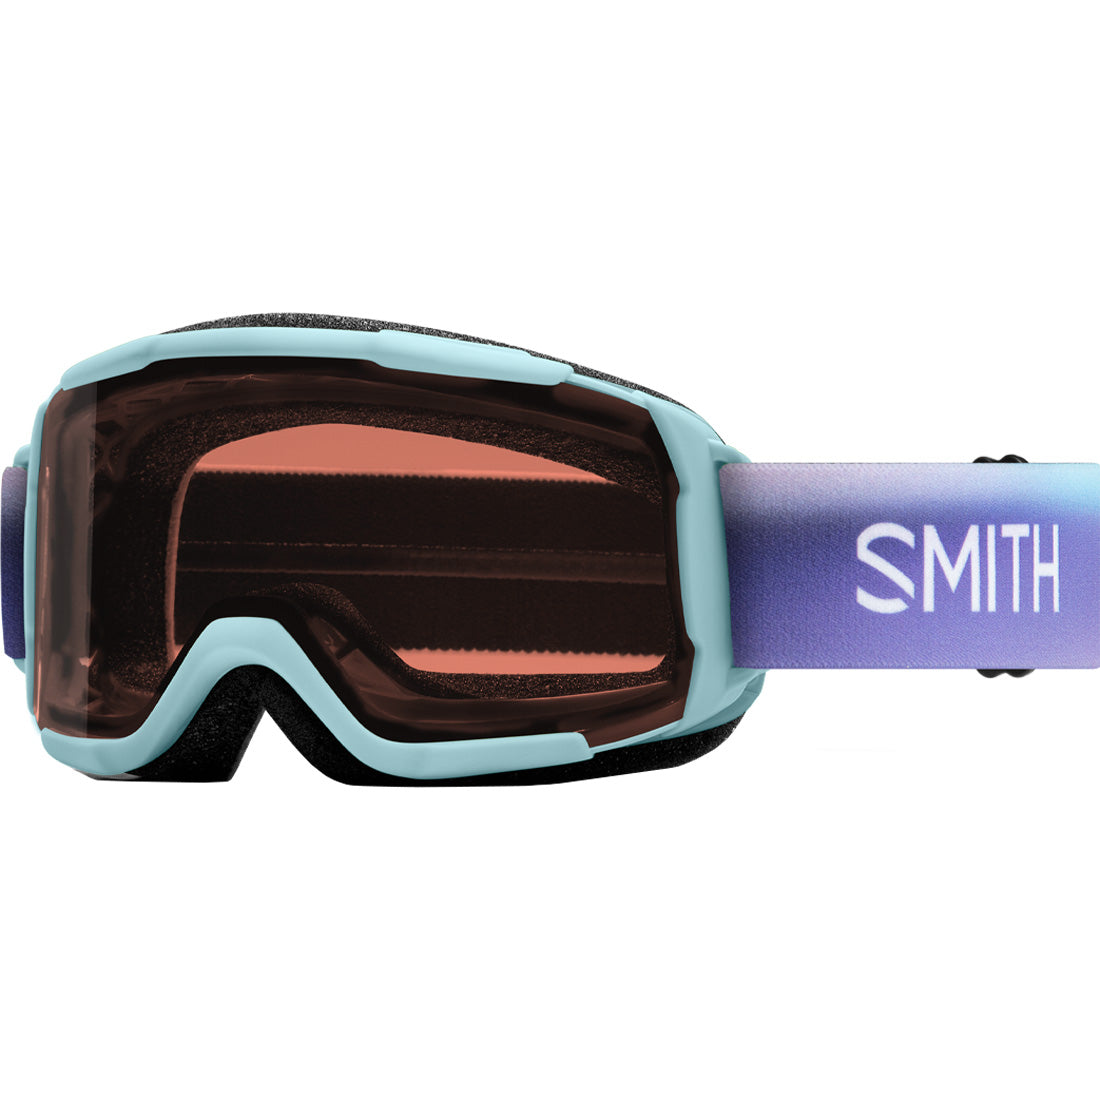 Smith Daredevil Goggle - Kids